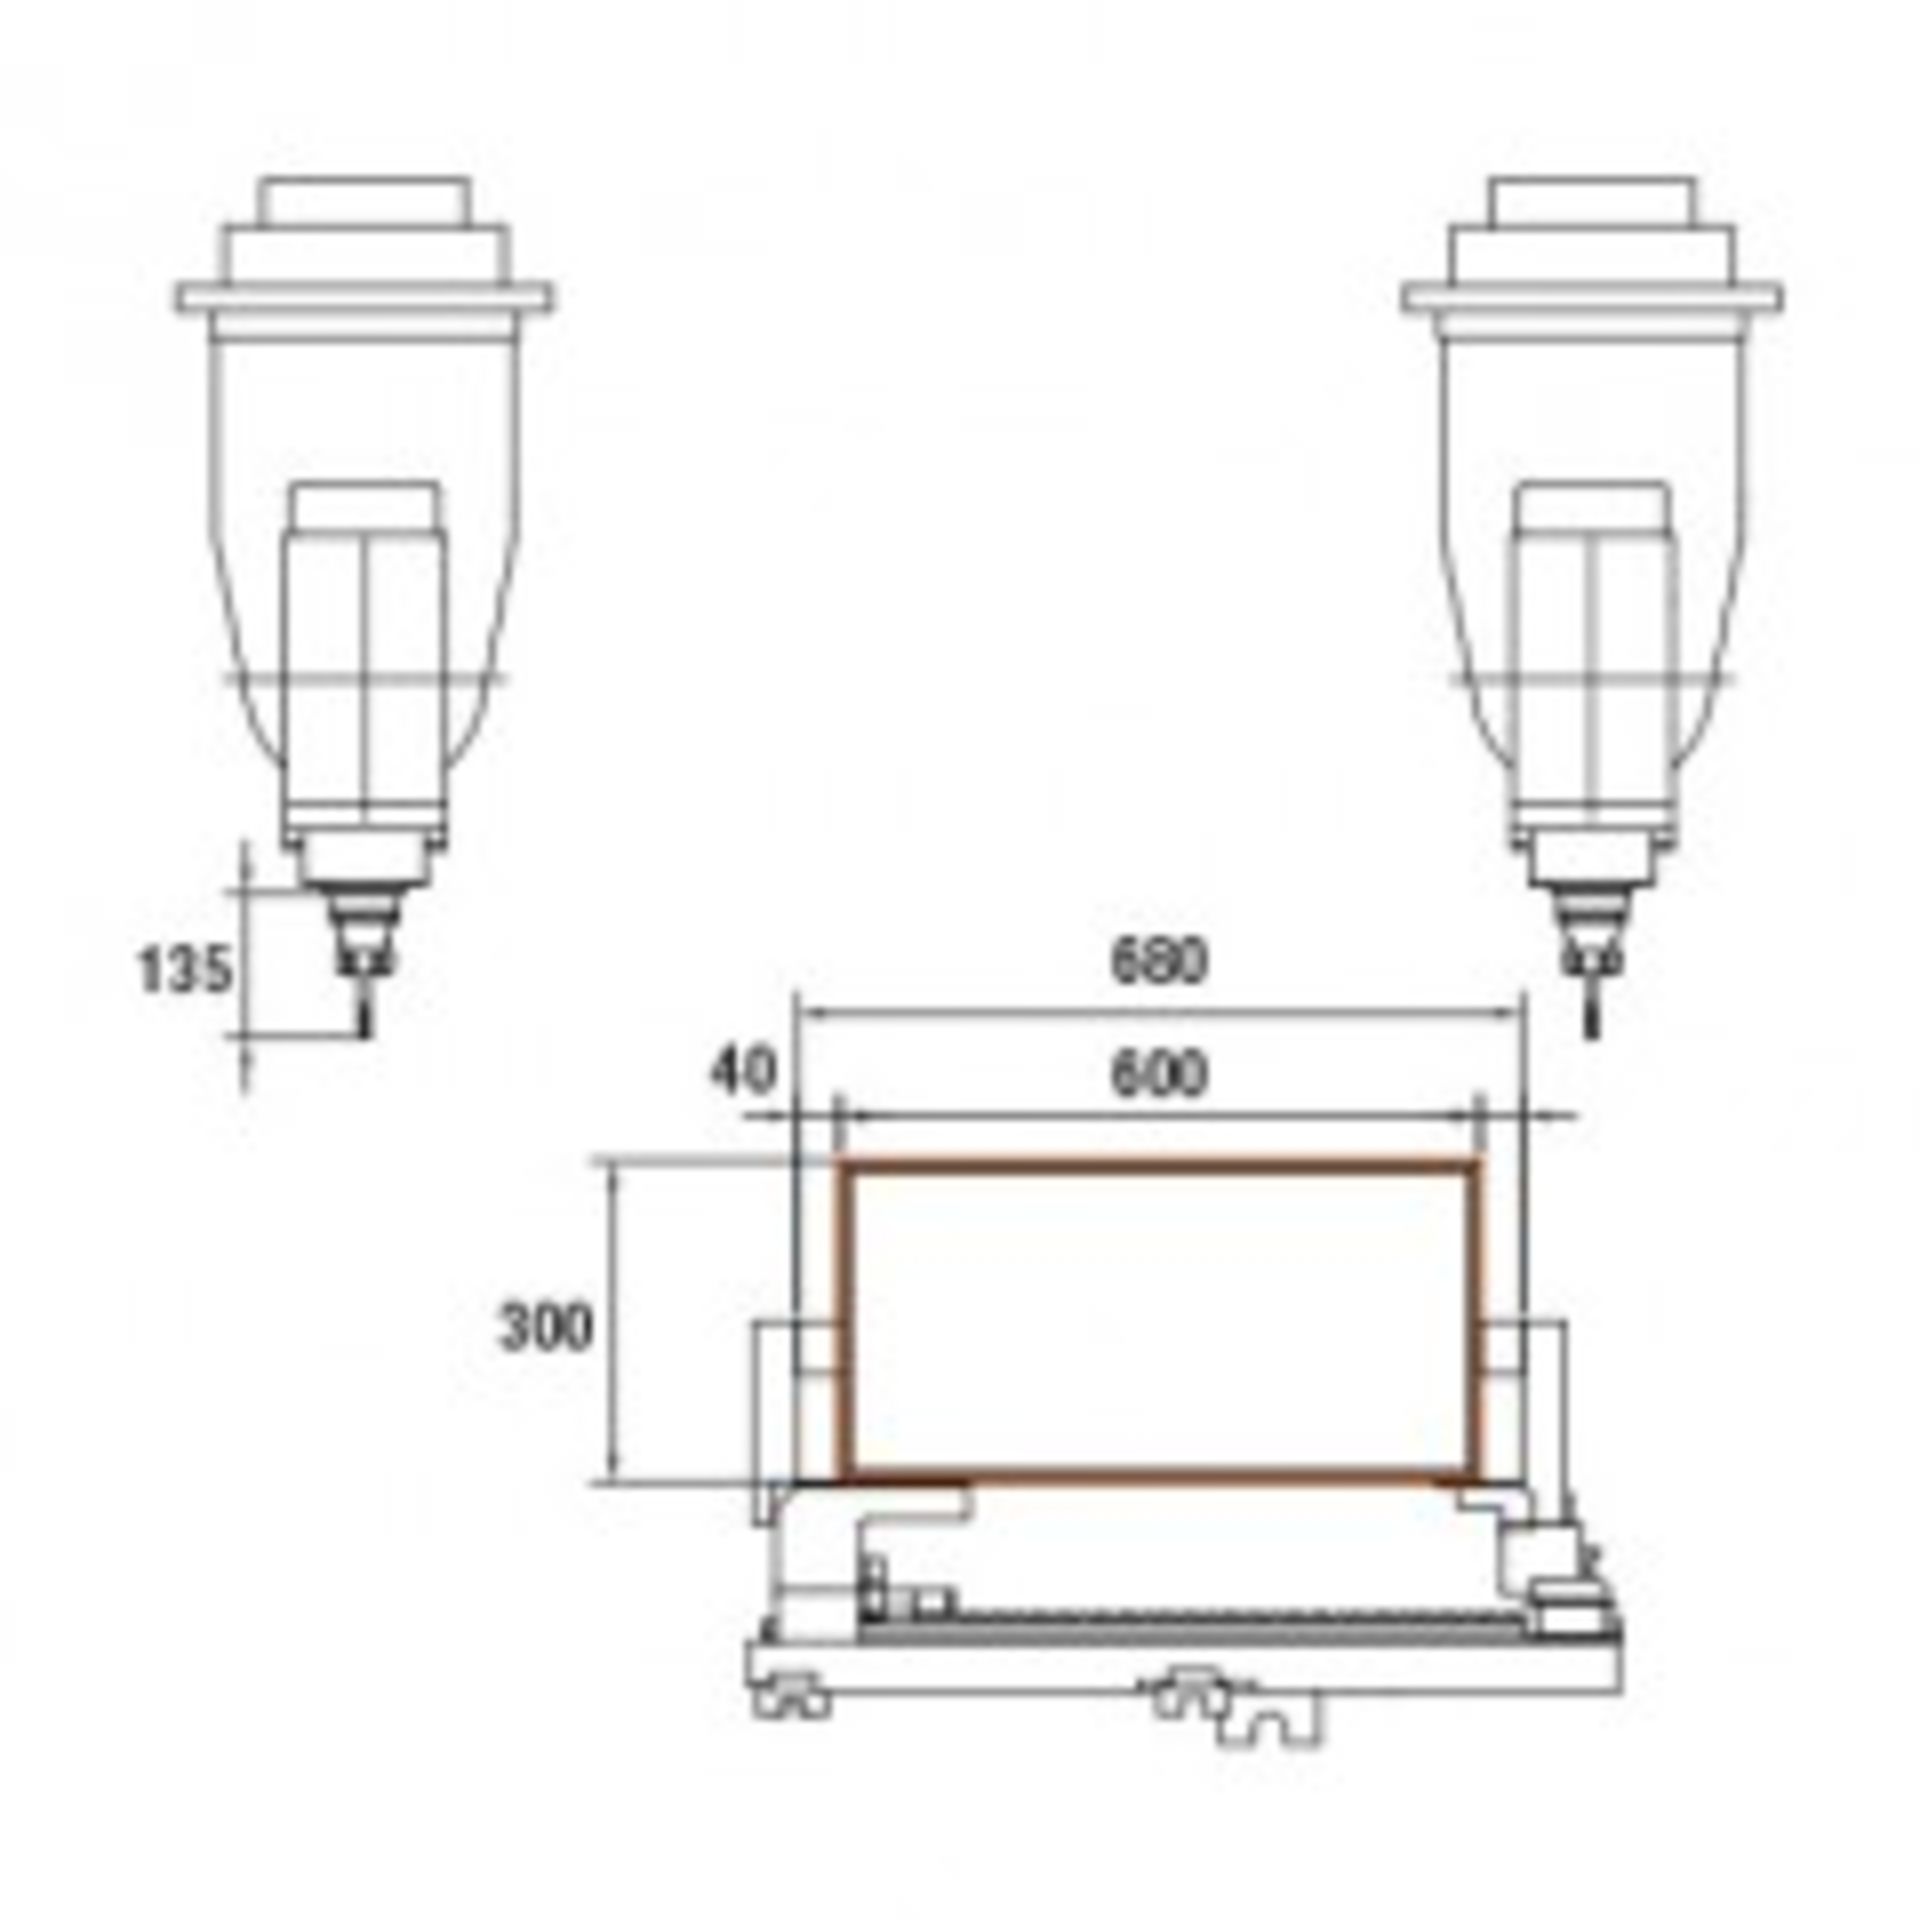 10 METER ELUMATEC SBZ 151 5-AXIS CNC PROFILE VERTICAL MACHINIG CENTER, NEW 2014 - Image 20 of 31